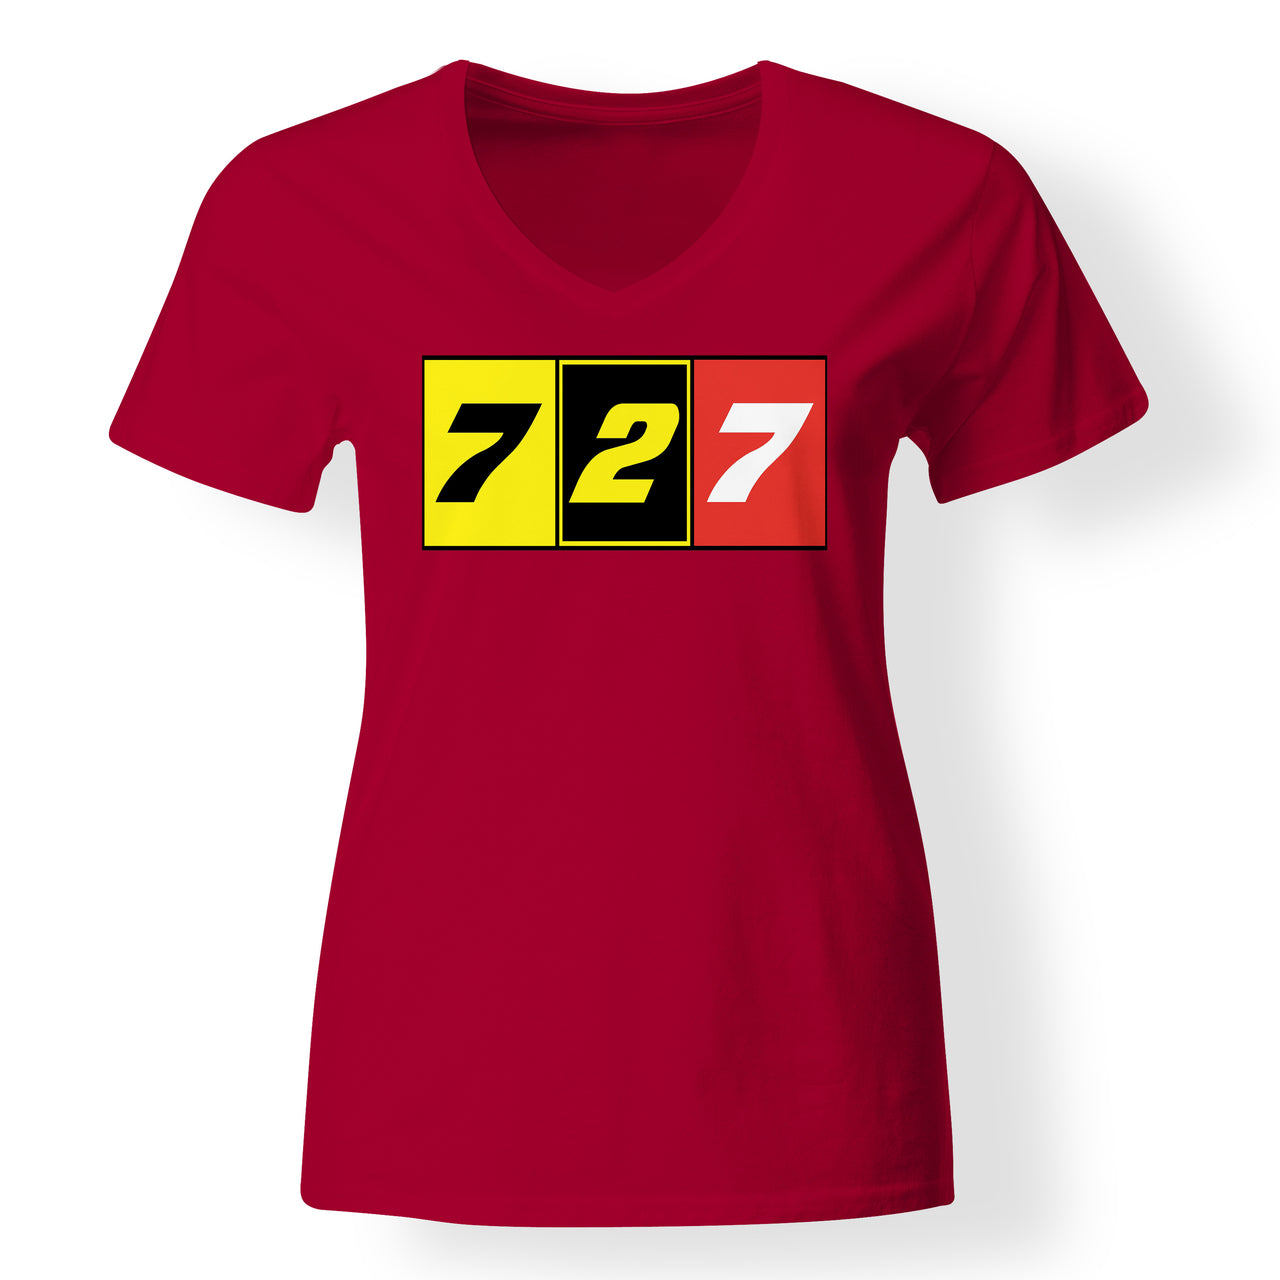 Flat Colourful 727 Designed V-Neck T-Shirts